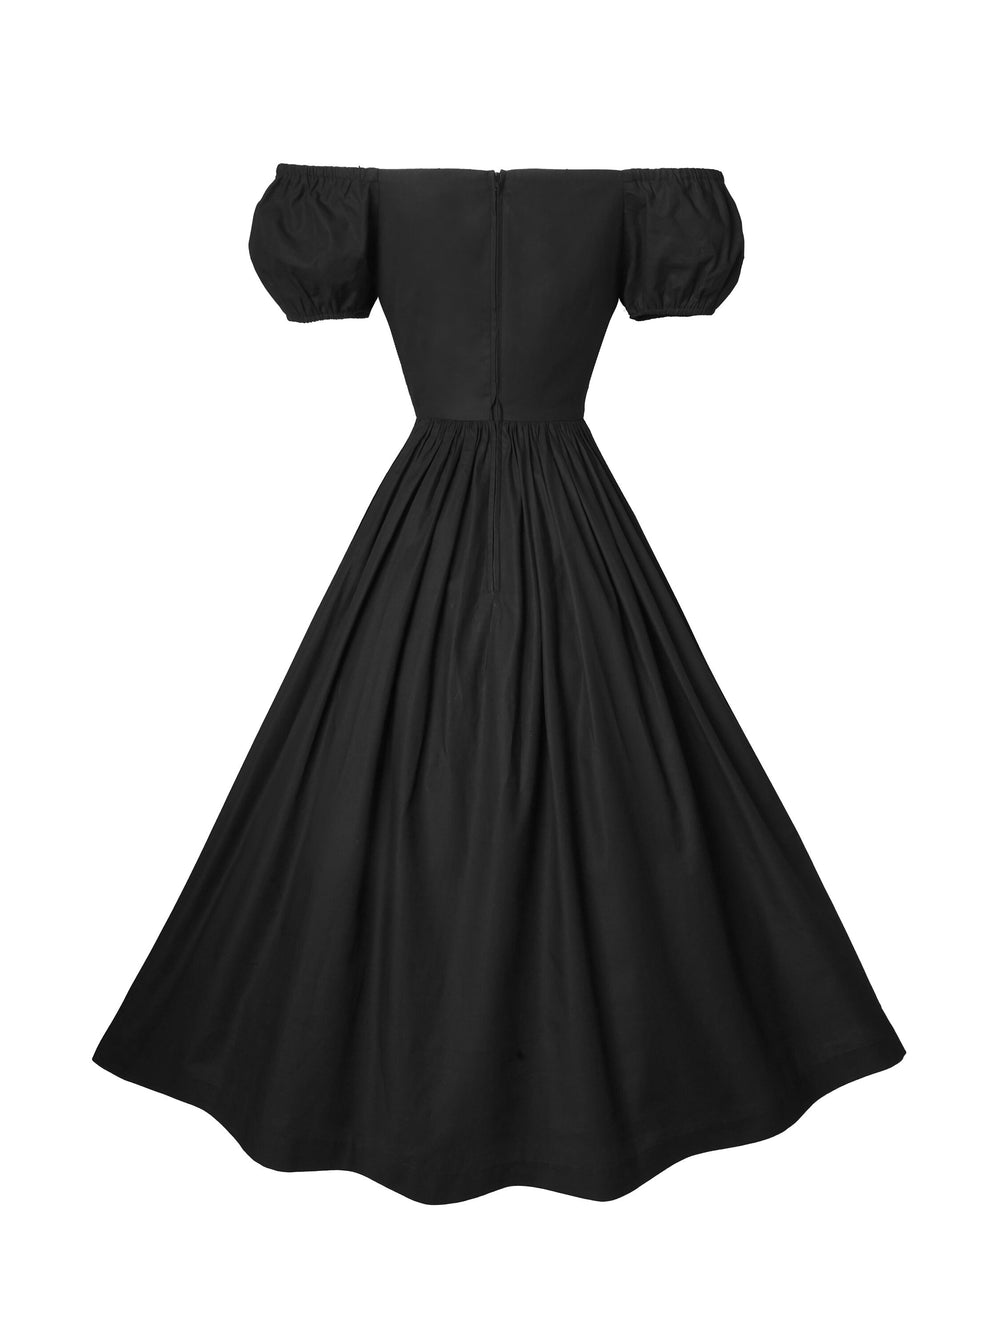 RTS - MULTI SIZE - Loretta Dress in Raven Black Cotton